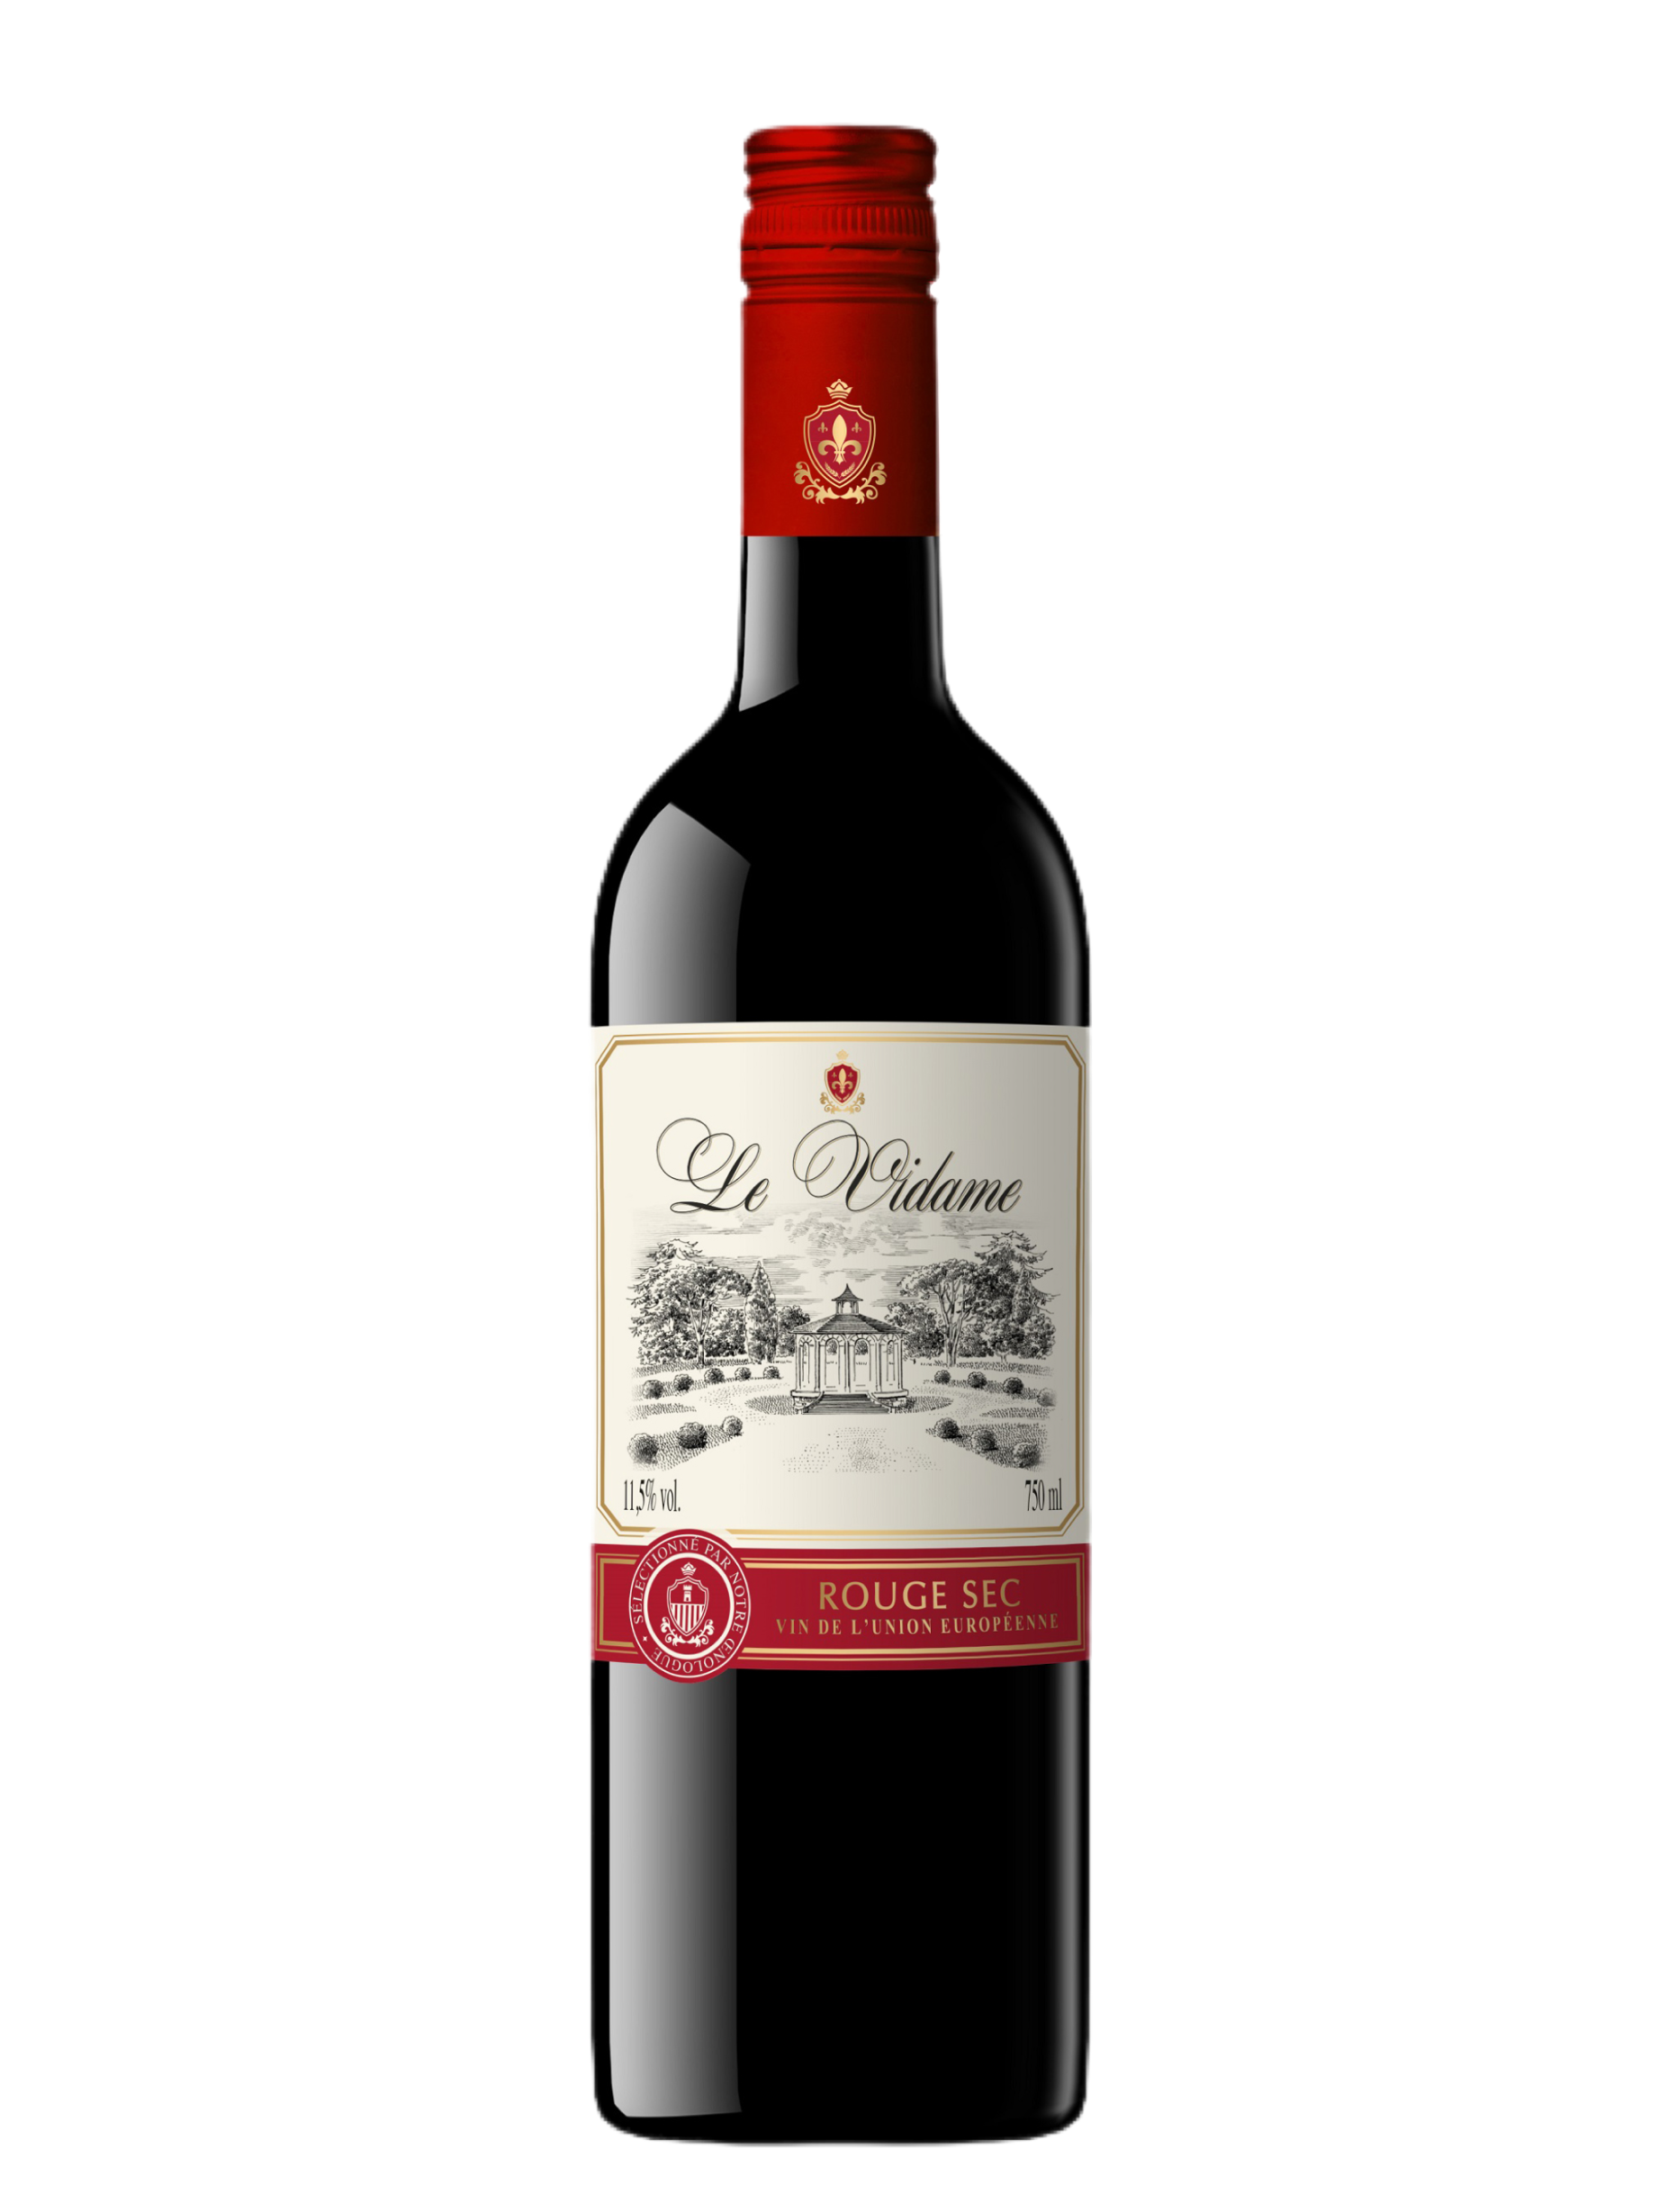 Французское вино каберне совиньон. Вино Шато Вантенак ла резерв. Вино Bonnet & associes Chateau Blaignan Medoc Cru Bourgeois 0.75 л. Шато Ле Гран Восток Мерло сухое красное.